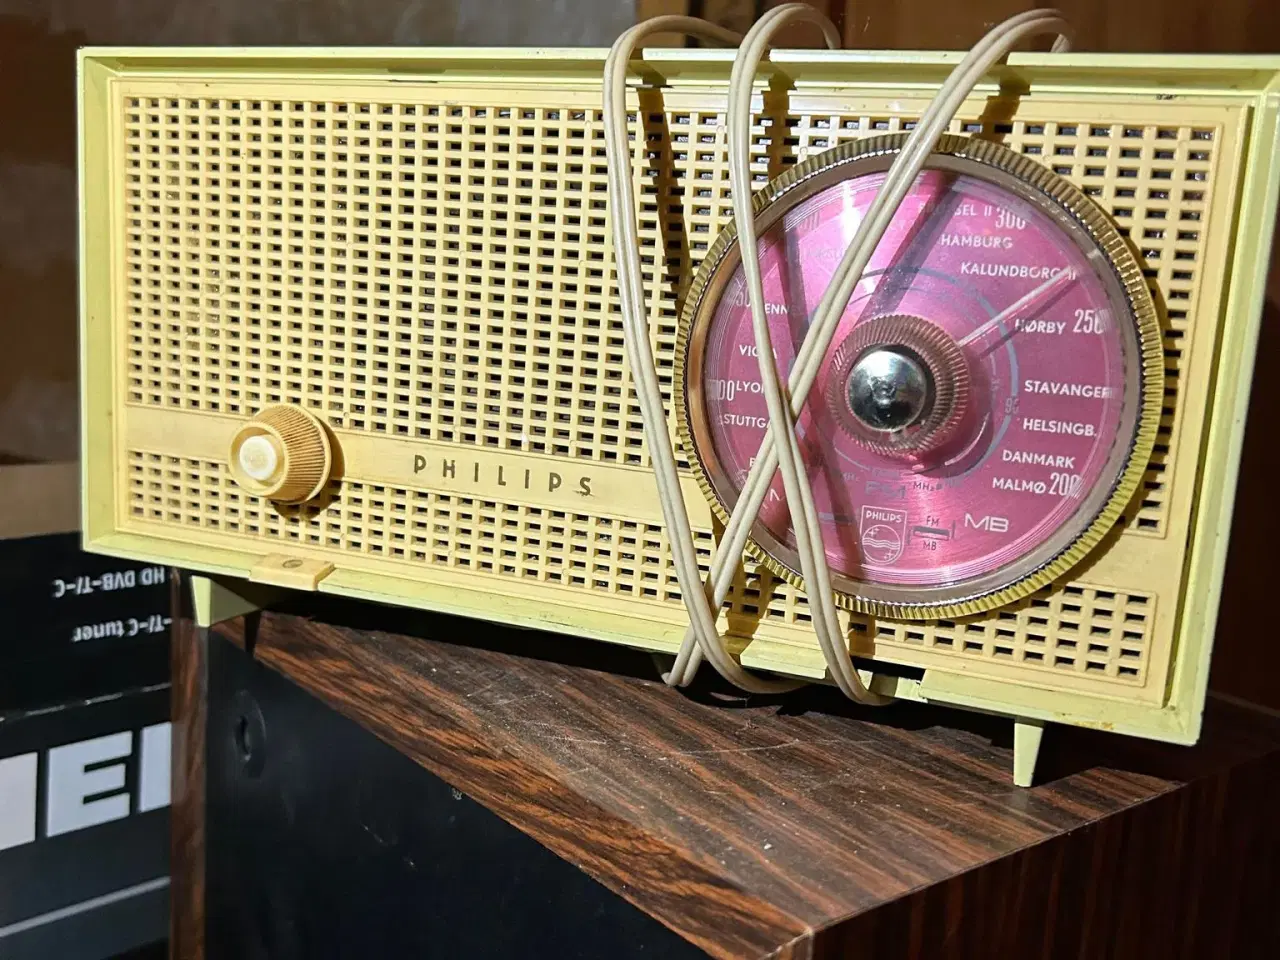 Billede 1 - Phillips radio